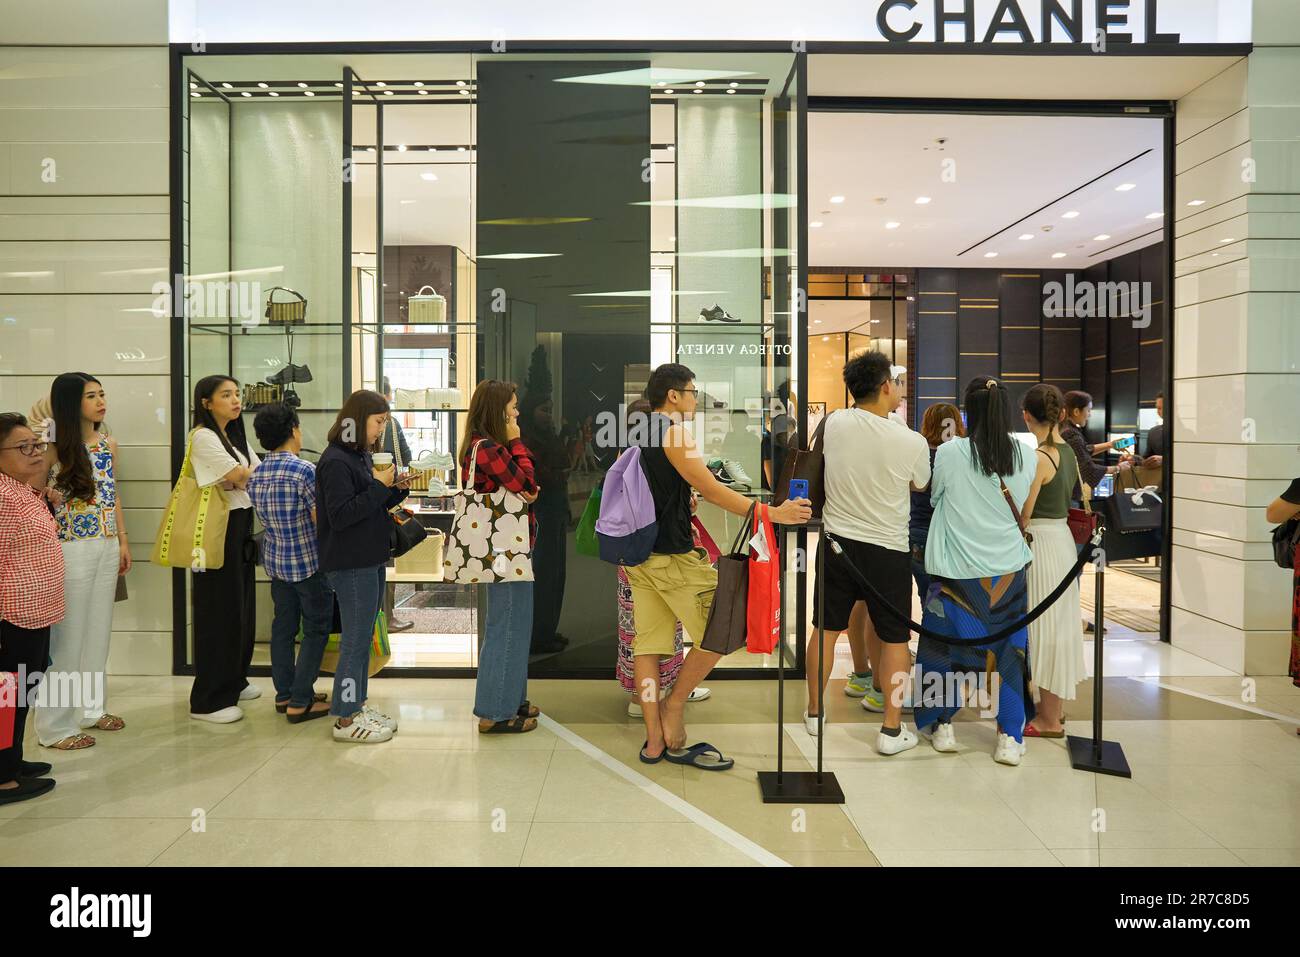 CHANEL Shop In Siam Paragon Mall, Bangkok, Thailand Stock Photo